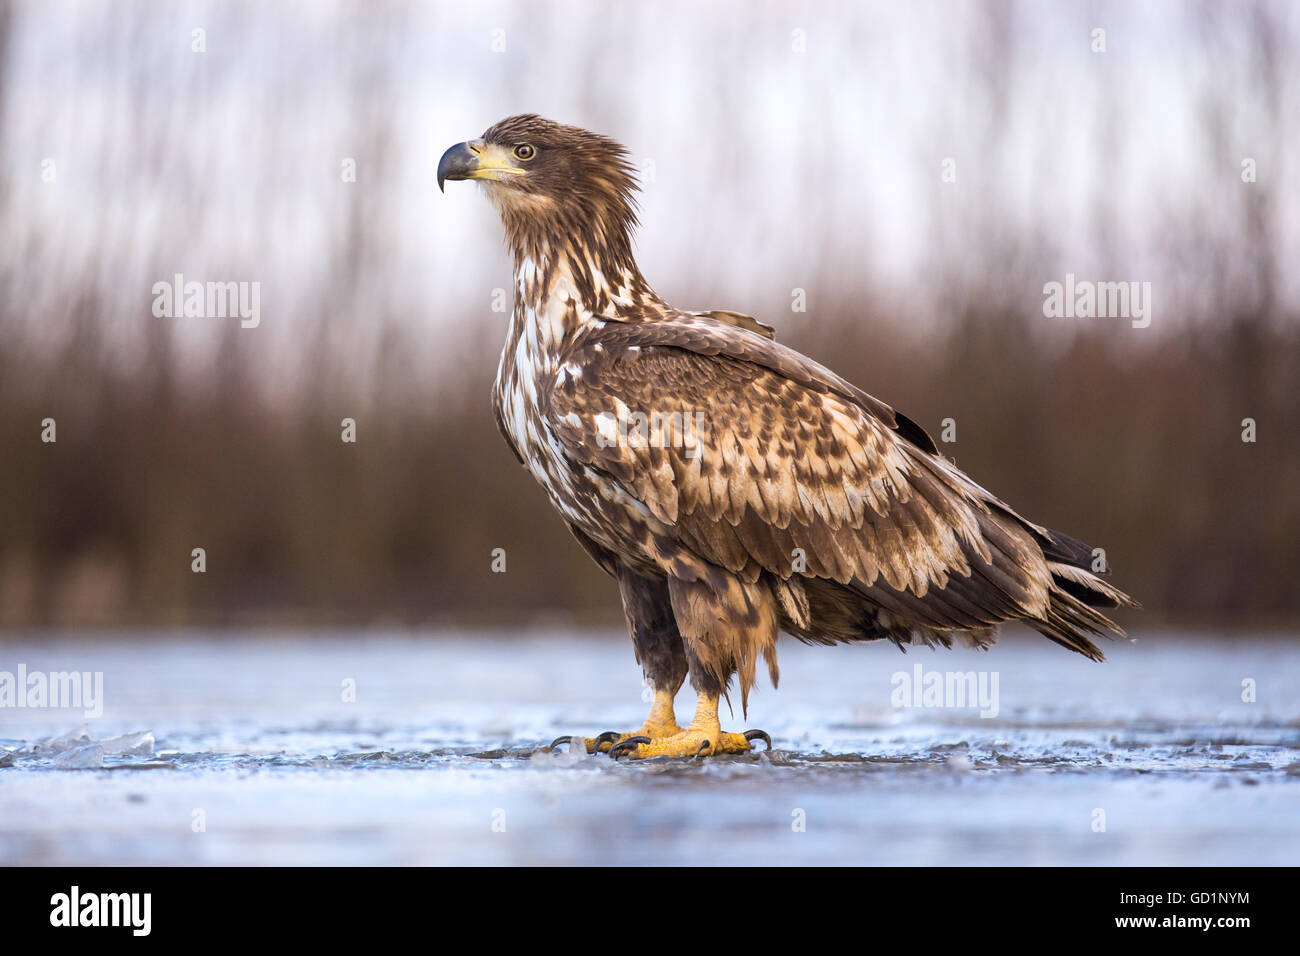 Juvenile White-tailed Eagle (Haliaeetus albicilla) standing on ice in a frozen marsh Stock Photo